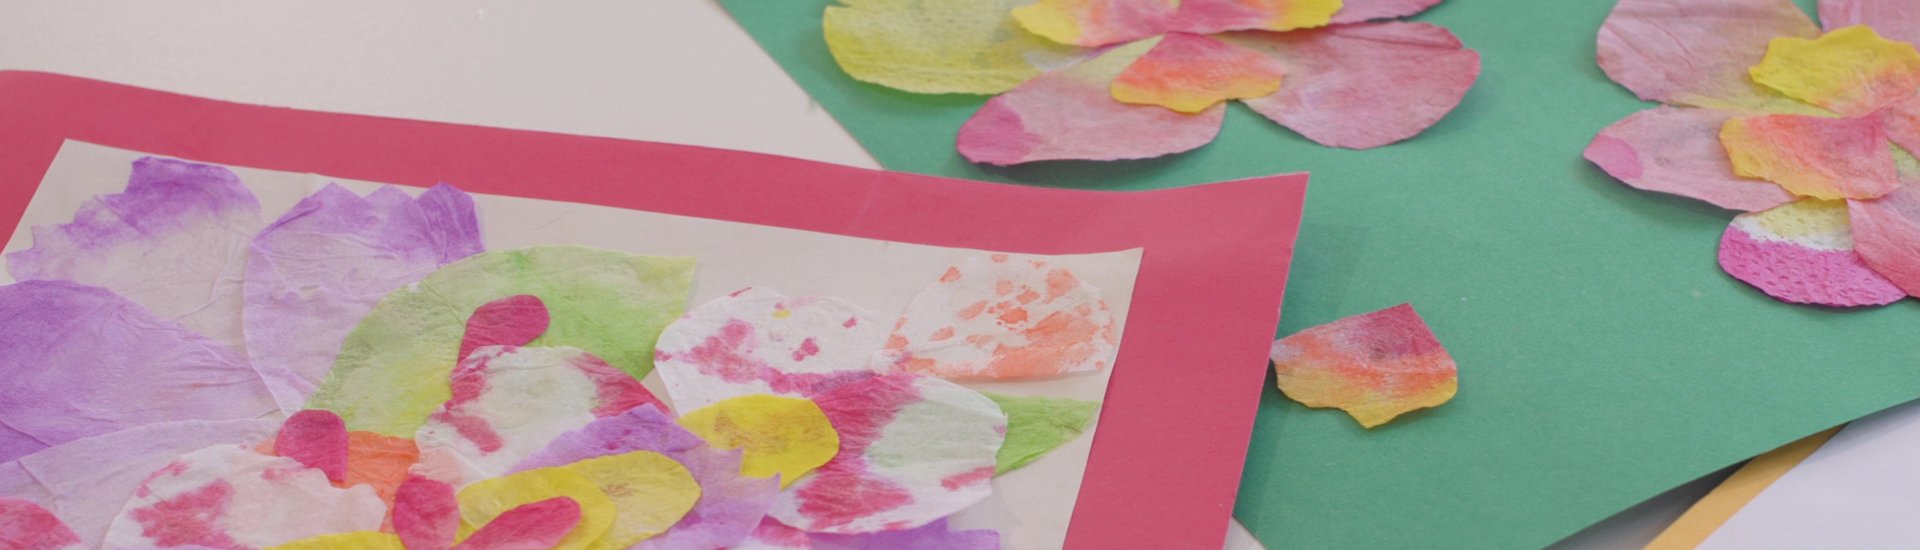 Detalhes de pétalas de papel nas cores rosa, amarelo, verde e lilás.